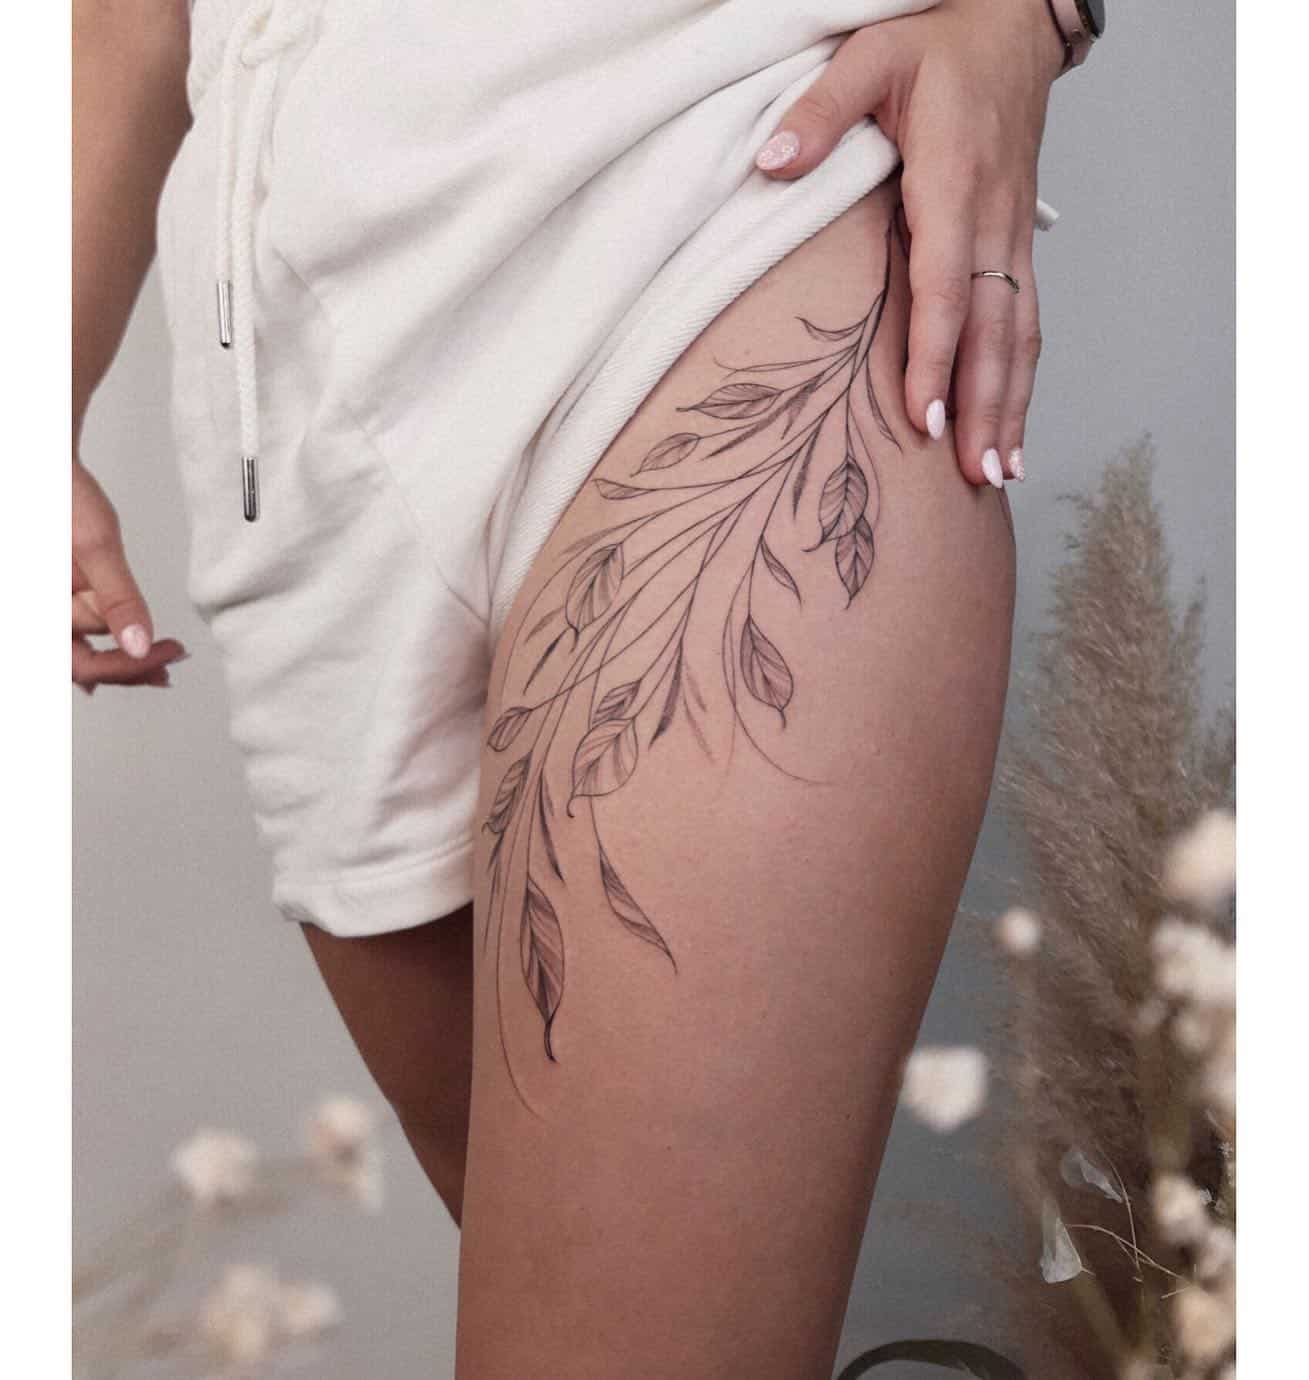 70 Thigh Tattoos for Women That Evoke Femininity and Power  100 Tattoos